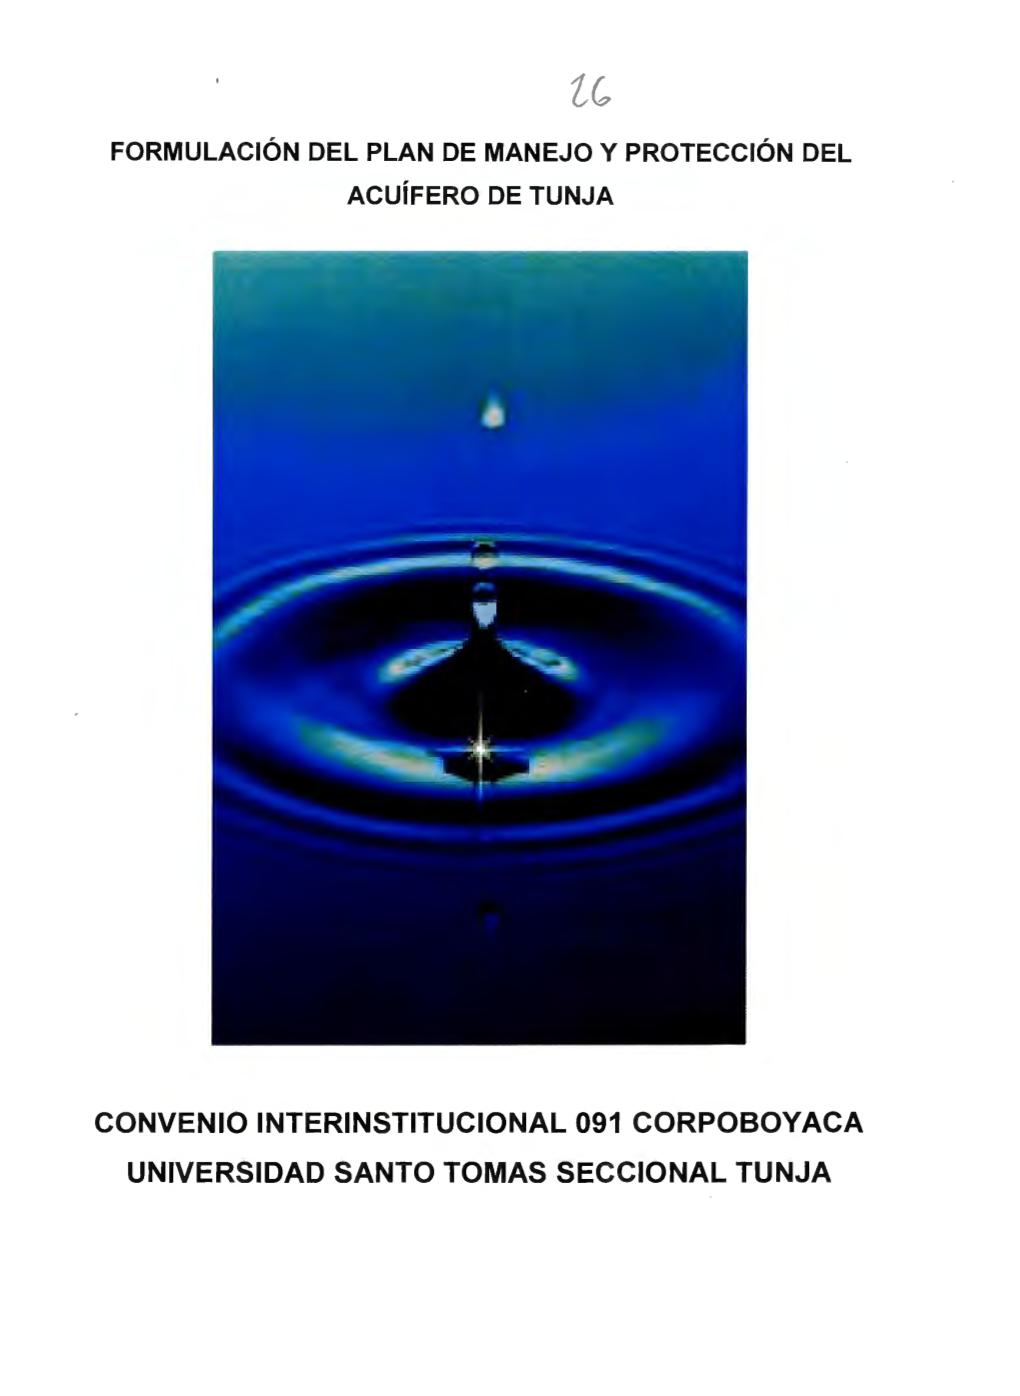 Convenio Interinstitucional 091 Corpoboyaca Universidad Santo Tomas Seccional Tunja Testigo Documental